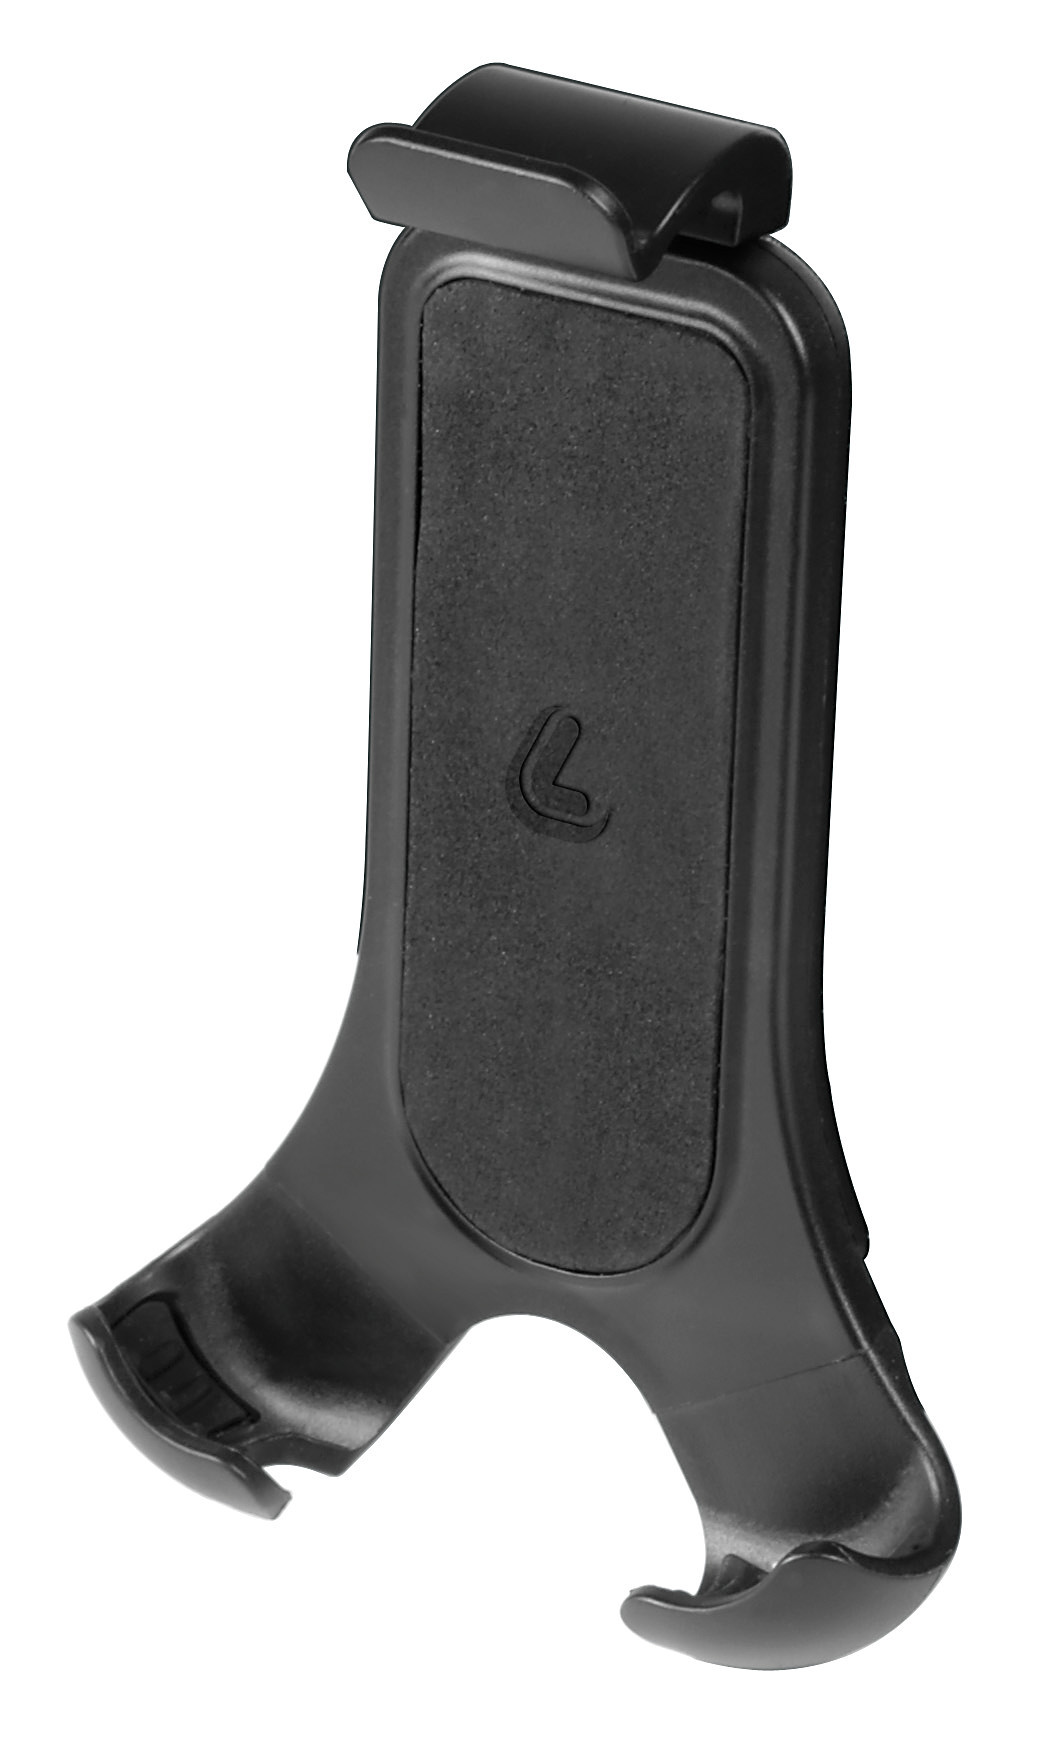 Opti Case, air flow cooling type universal phone holder thumb